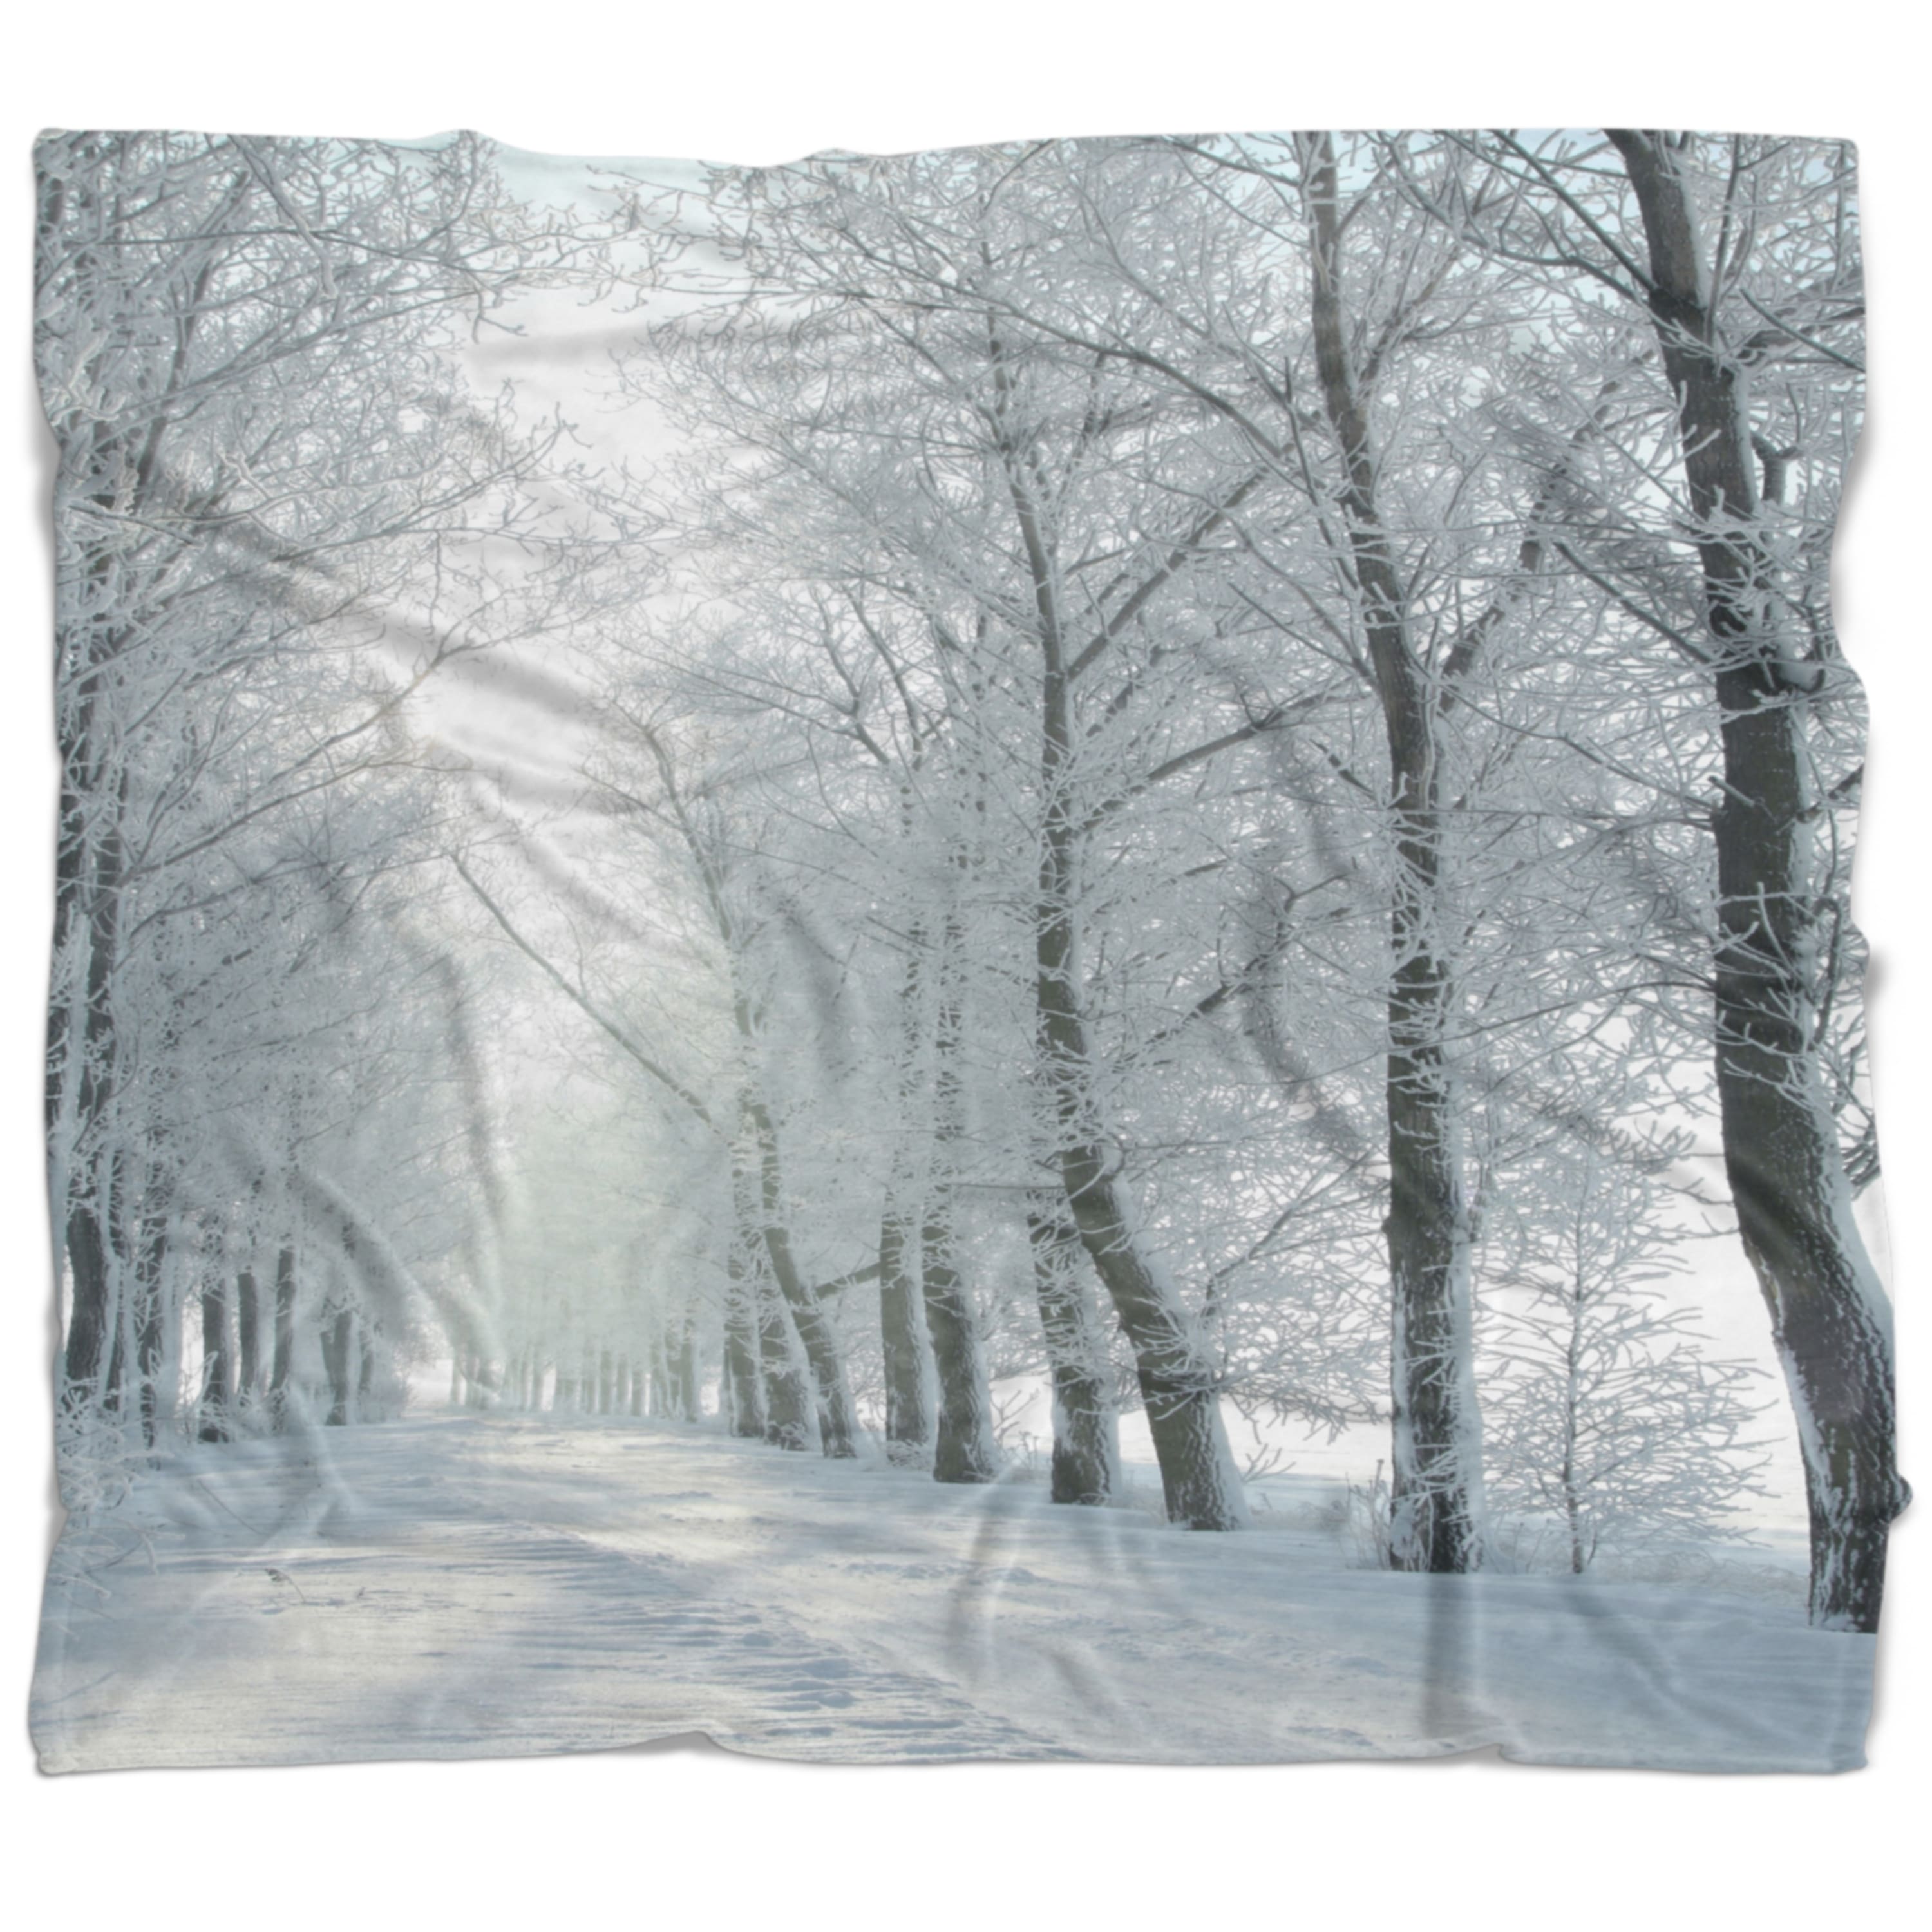 Buy Blankets Online at Overstock.com | Our Best Blankets Deals